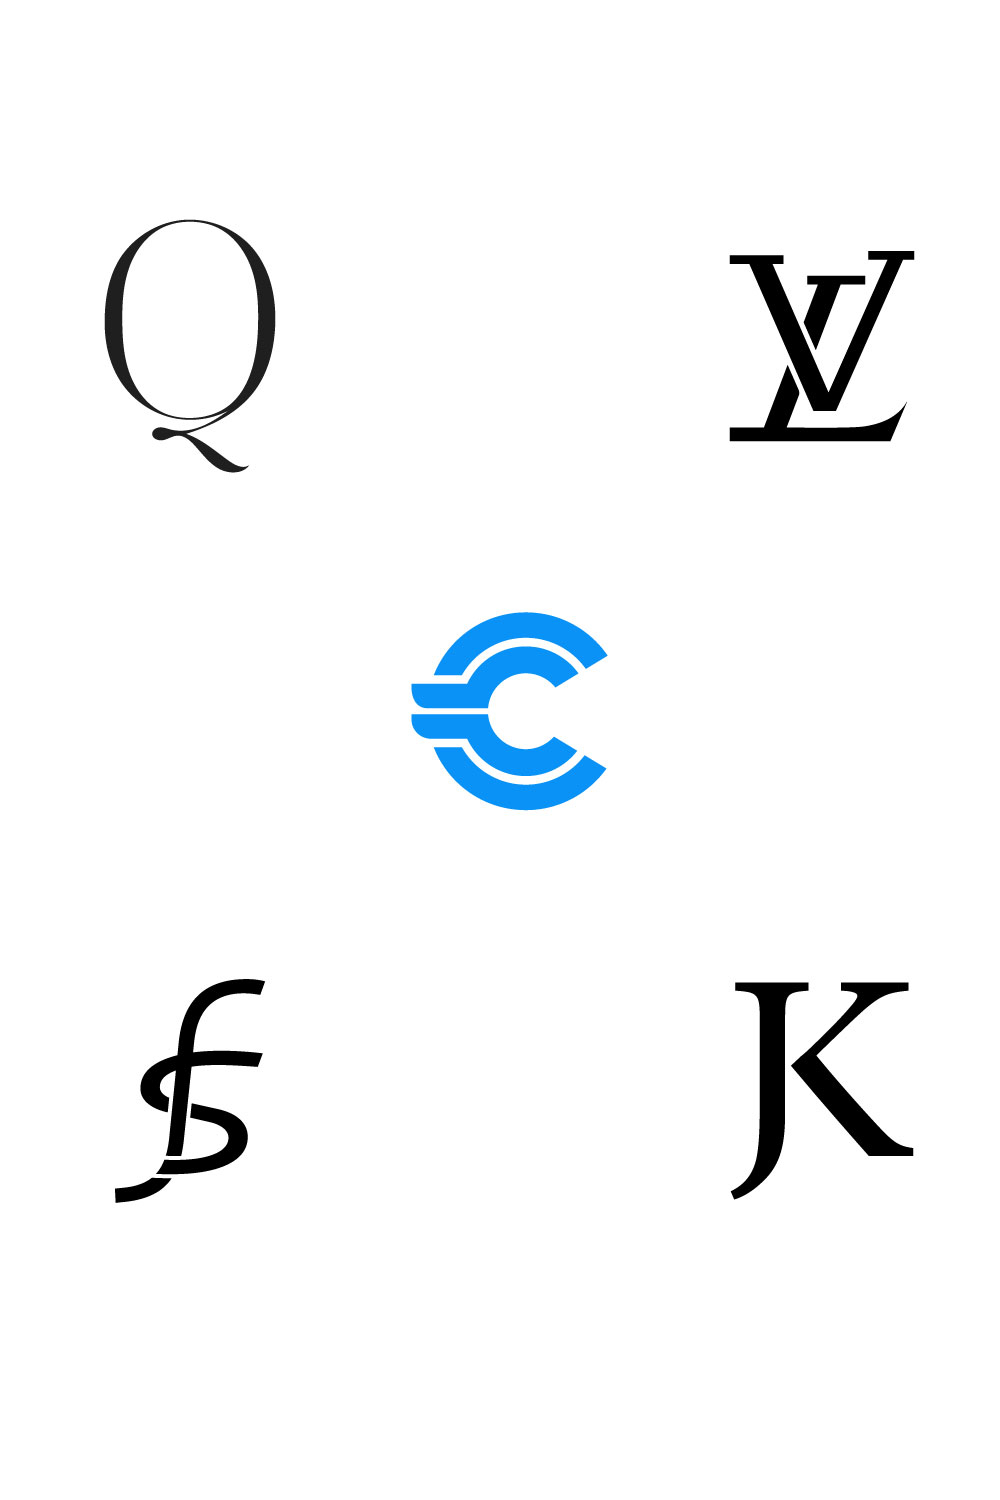 Five Word Mark Logos Design pinterest image.